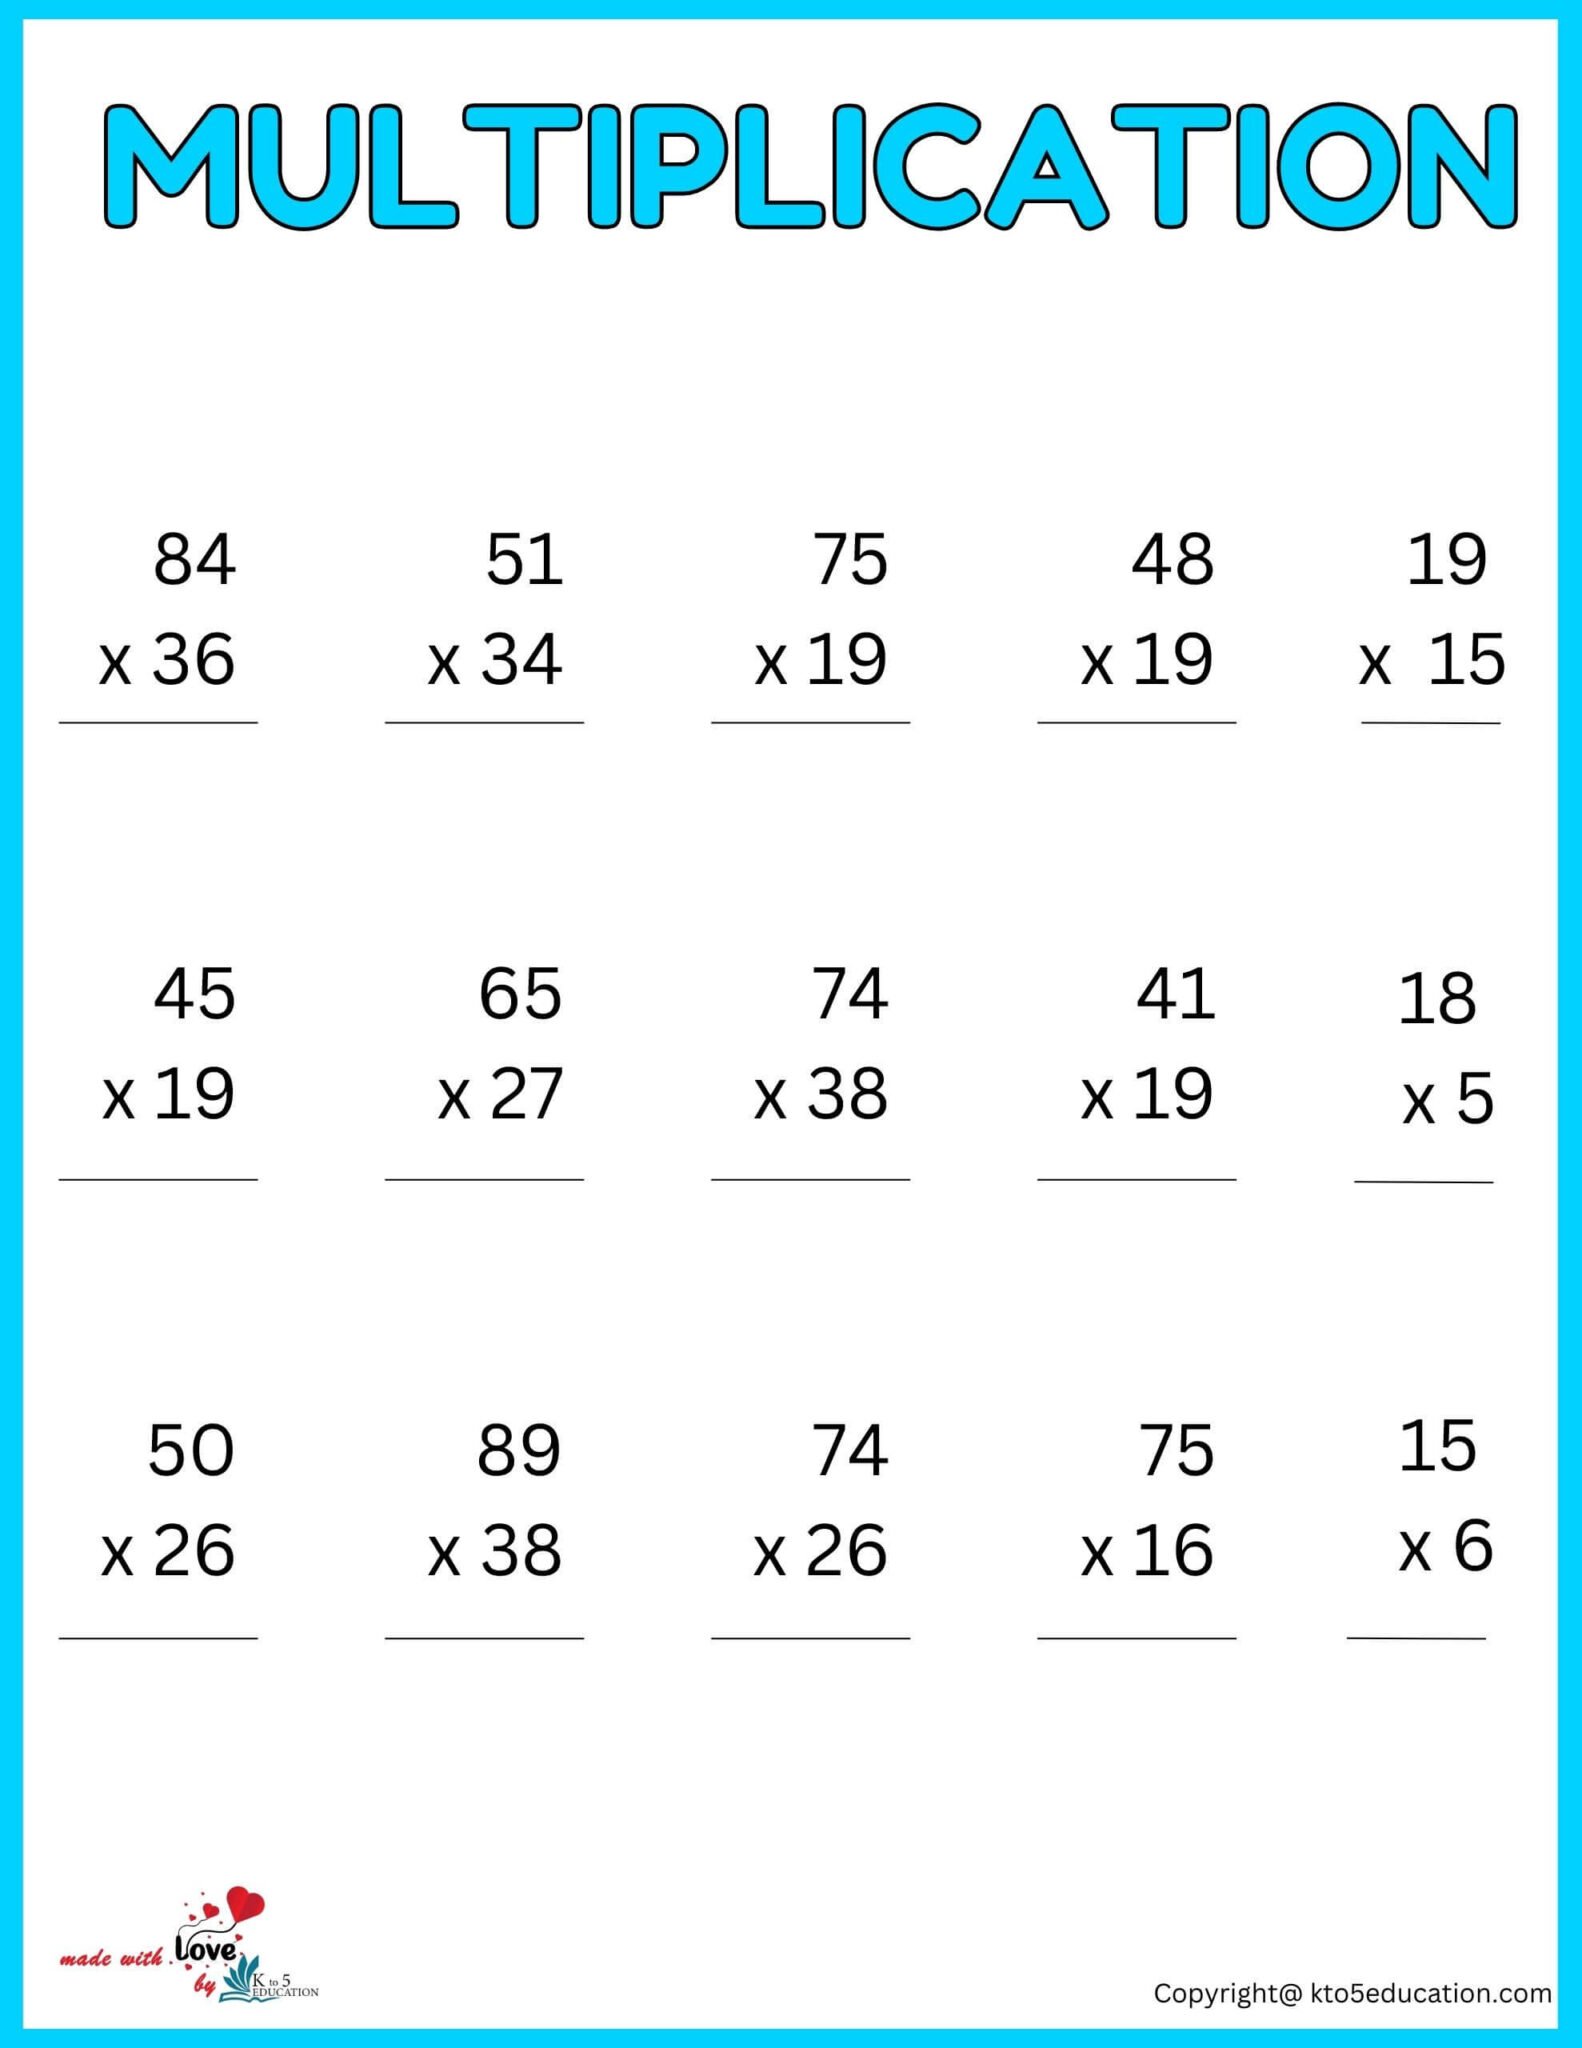 subtraction-with-number-line-worksheet-1-10-for-kids